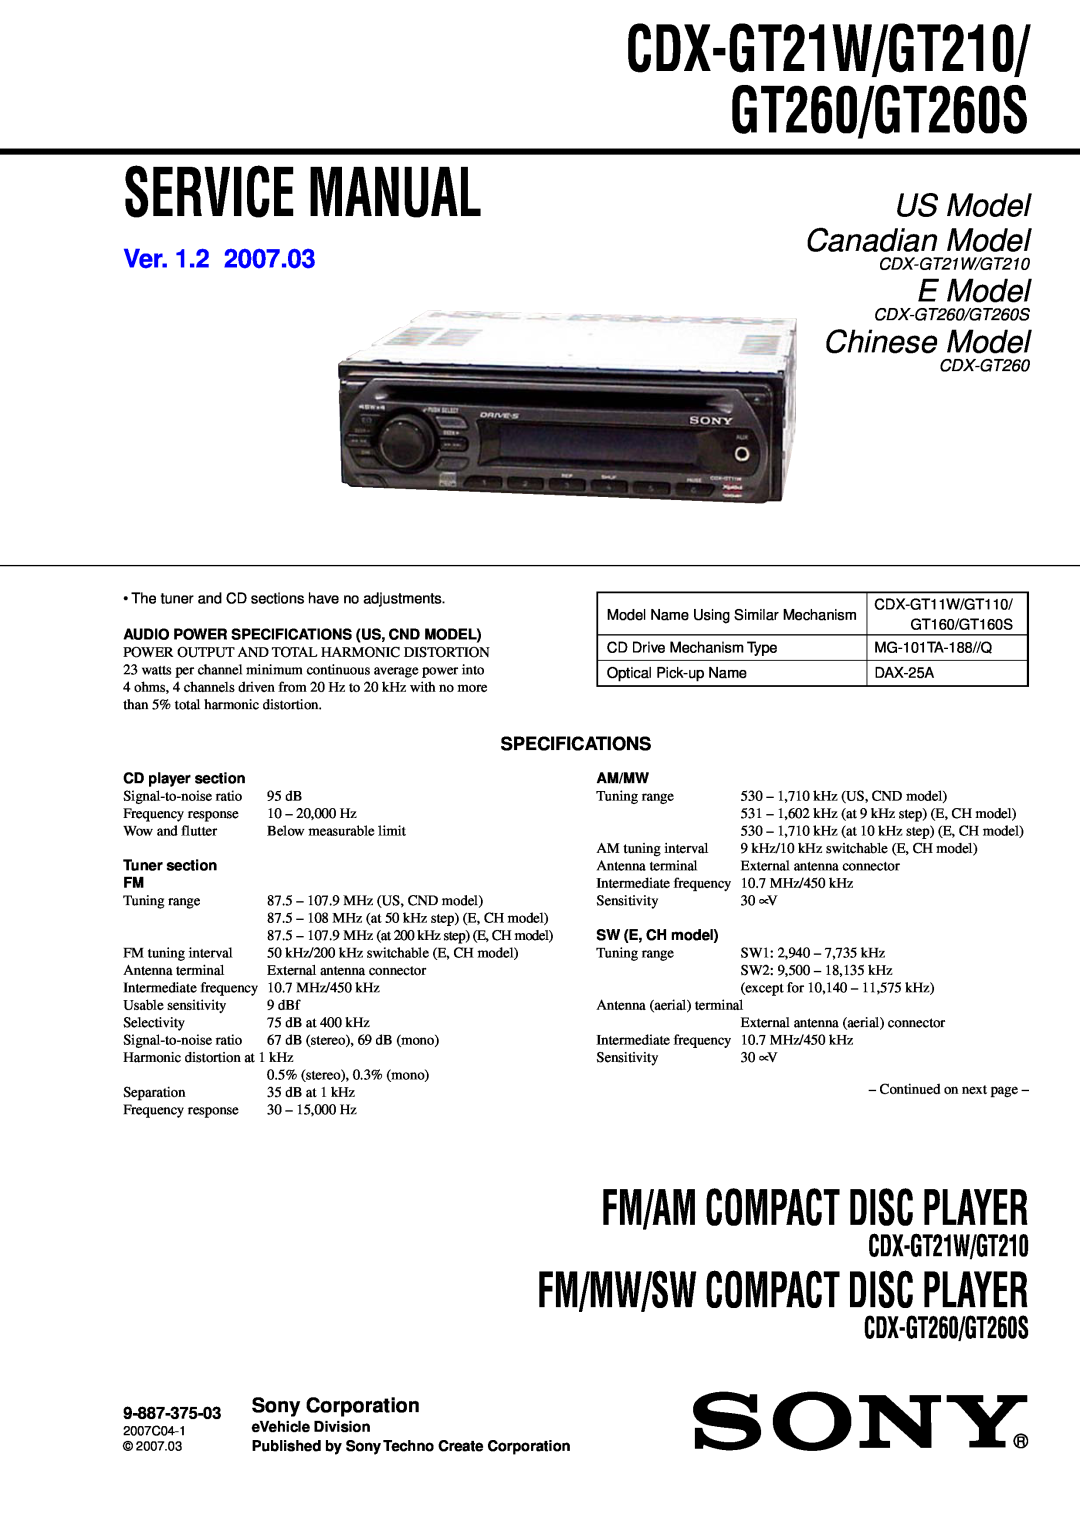 Sony CDX-GT210 service manual Fm/Am Compact Disc Player, CDX-GT21W/GT210/GT260/GT260S, US Model Canadian Model, E Model 